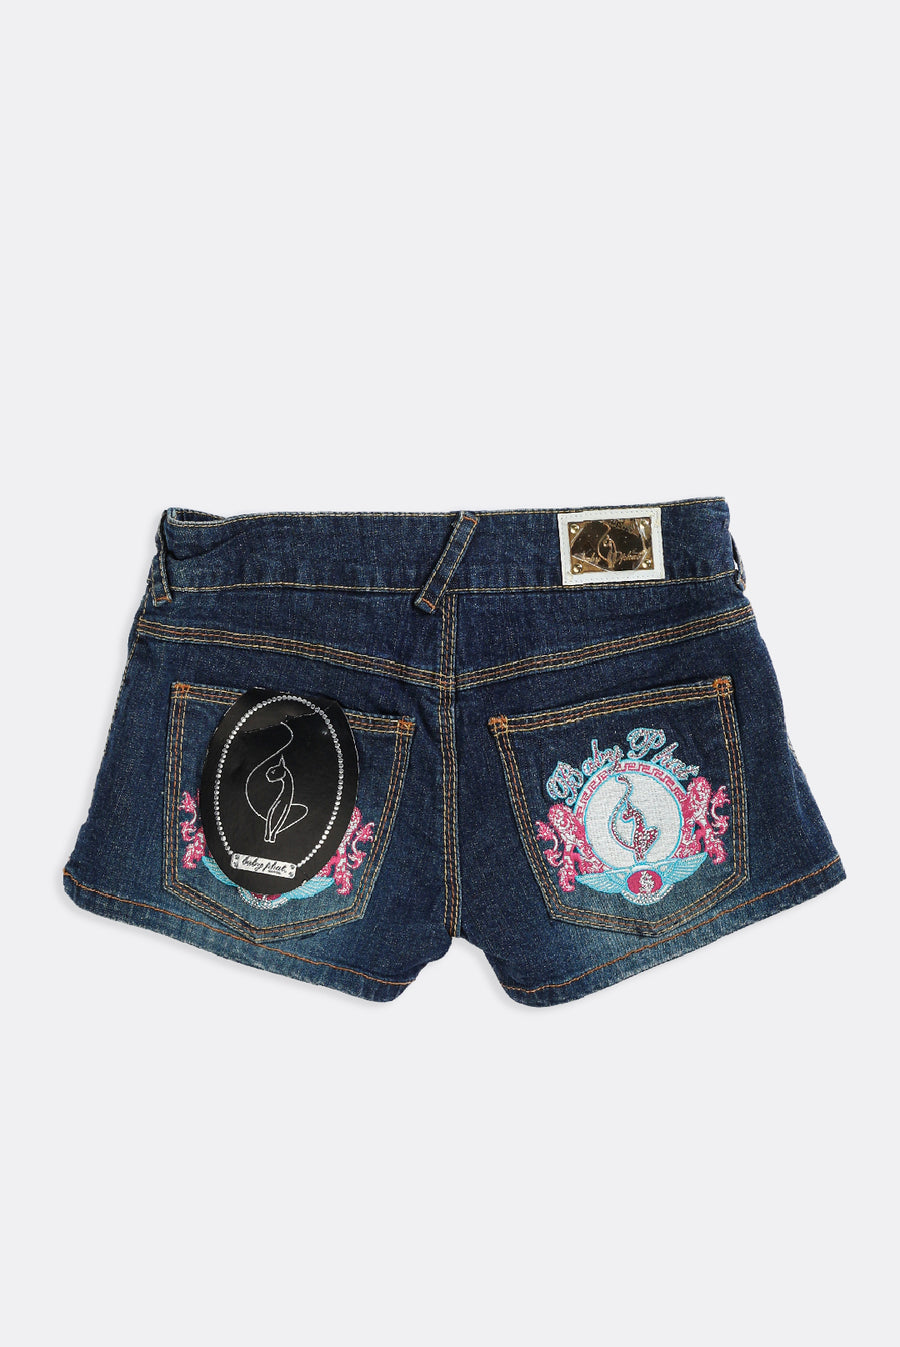 Deadstock Baby Phat Candyland Denim Shorts - W30, W33